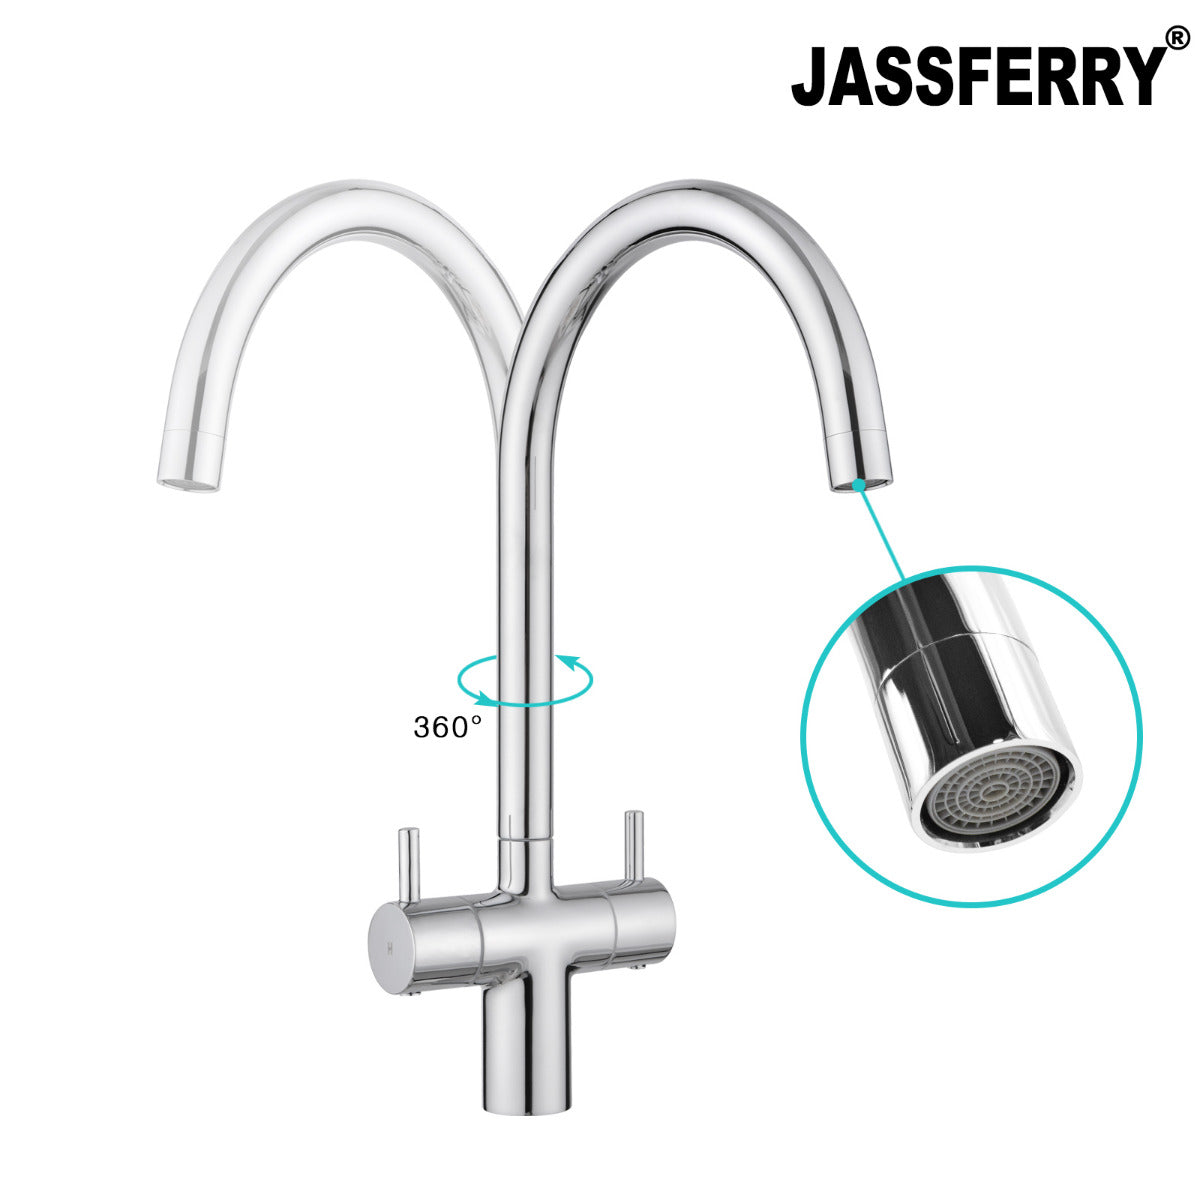 JassferryJASSFERRY Kitchen Sink Mixer Tap Monobloc Twin Dial Lever Swan Neck Swivel SpoutKitchen taps